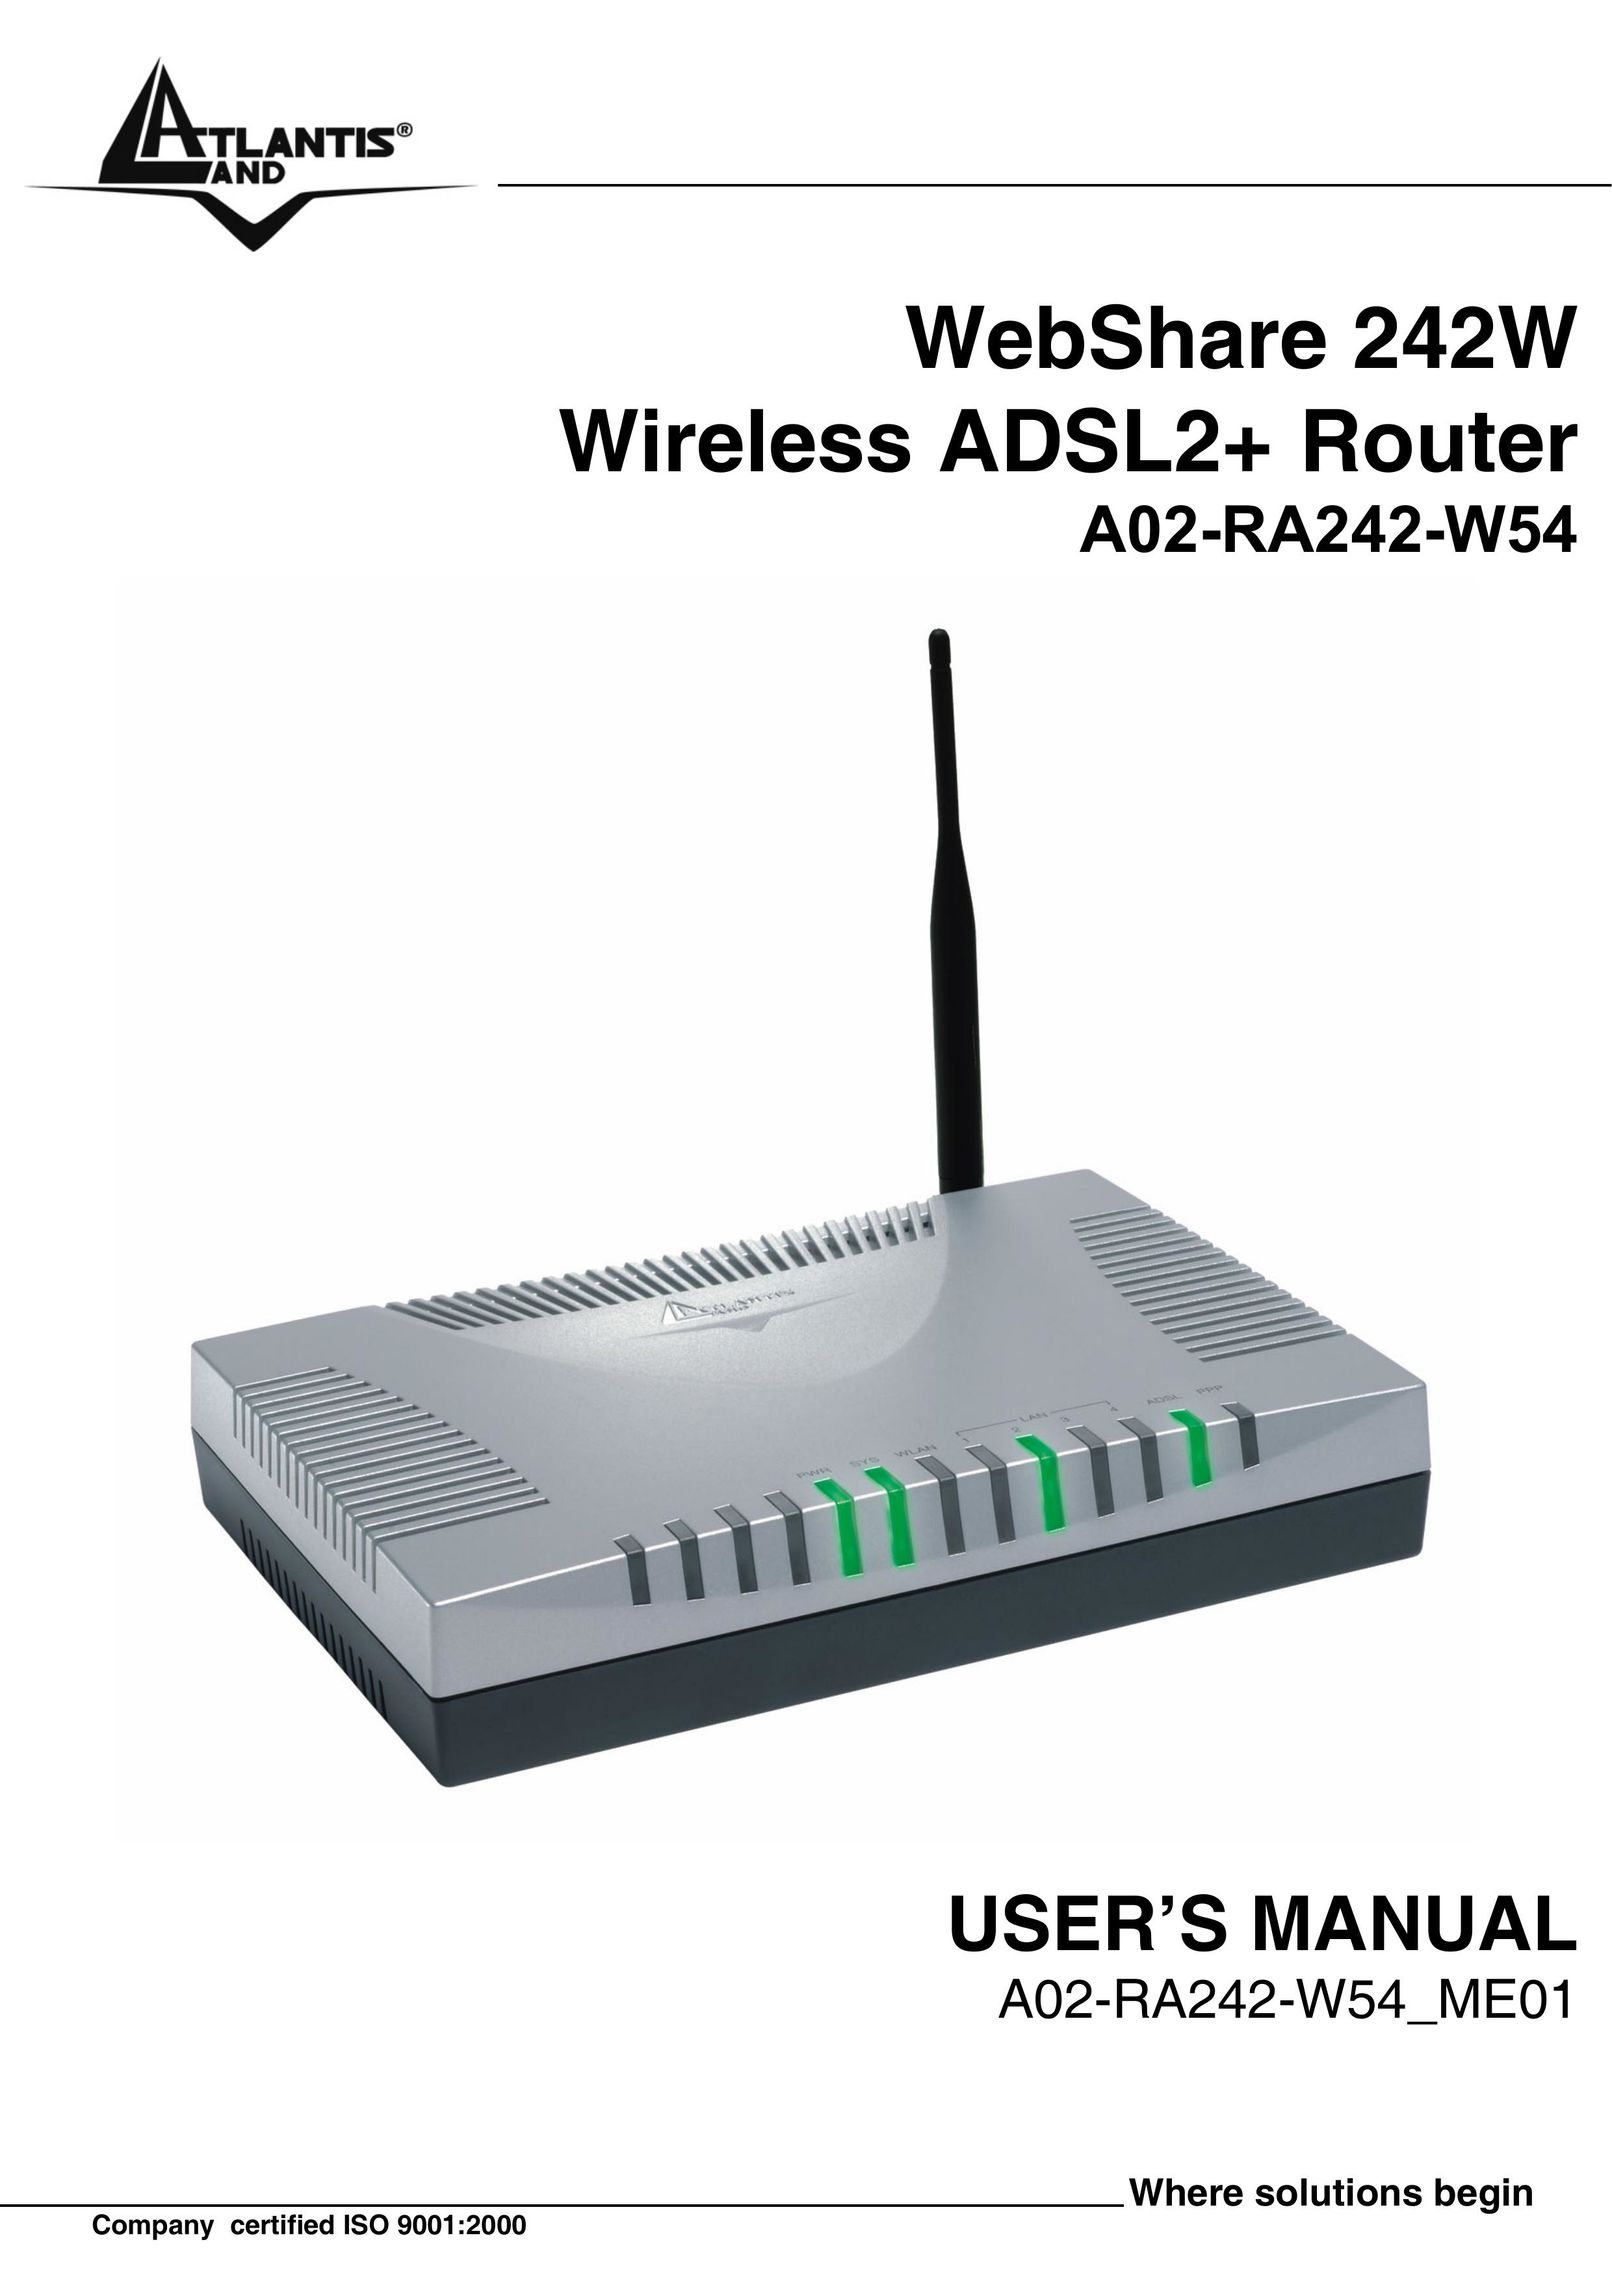 Atlantis Land A02-RA242-W54 Network Router User Manual